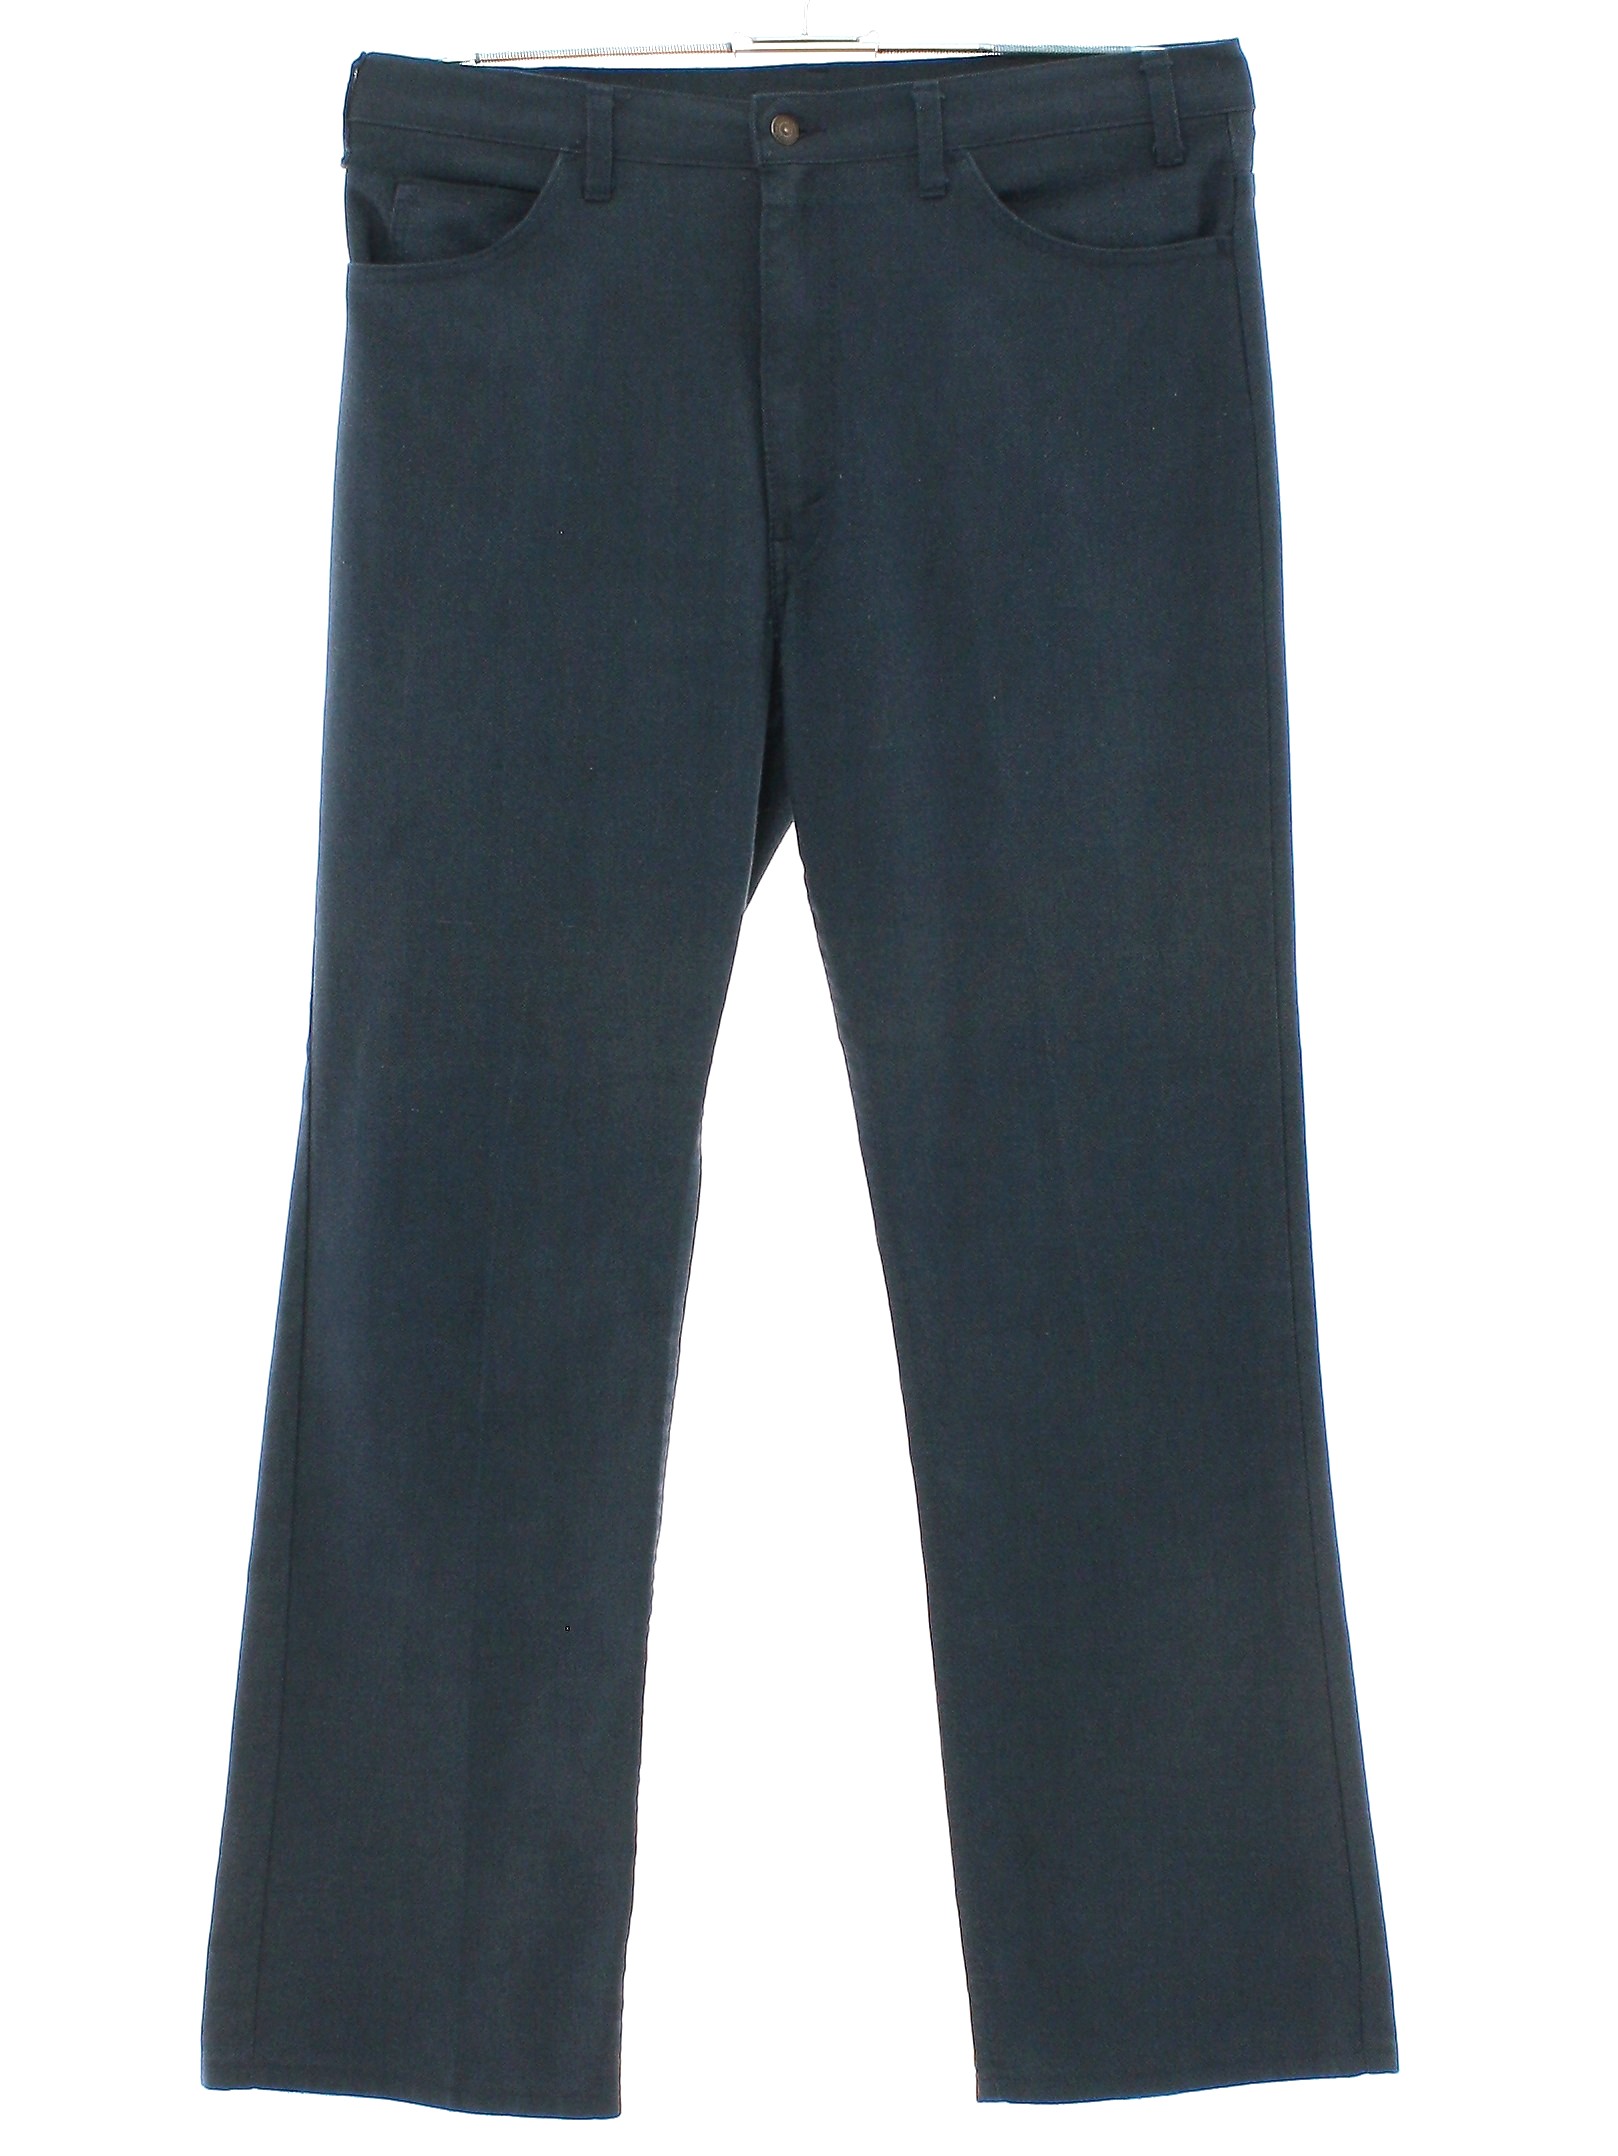 70s Vintage Levis Pants: 70s -Levis- Mens dusty navy blue solid colored ...